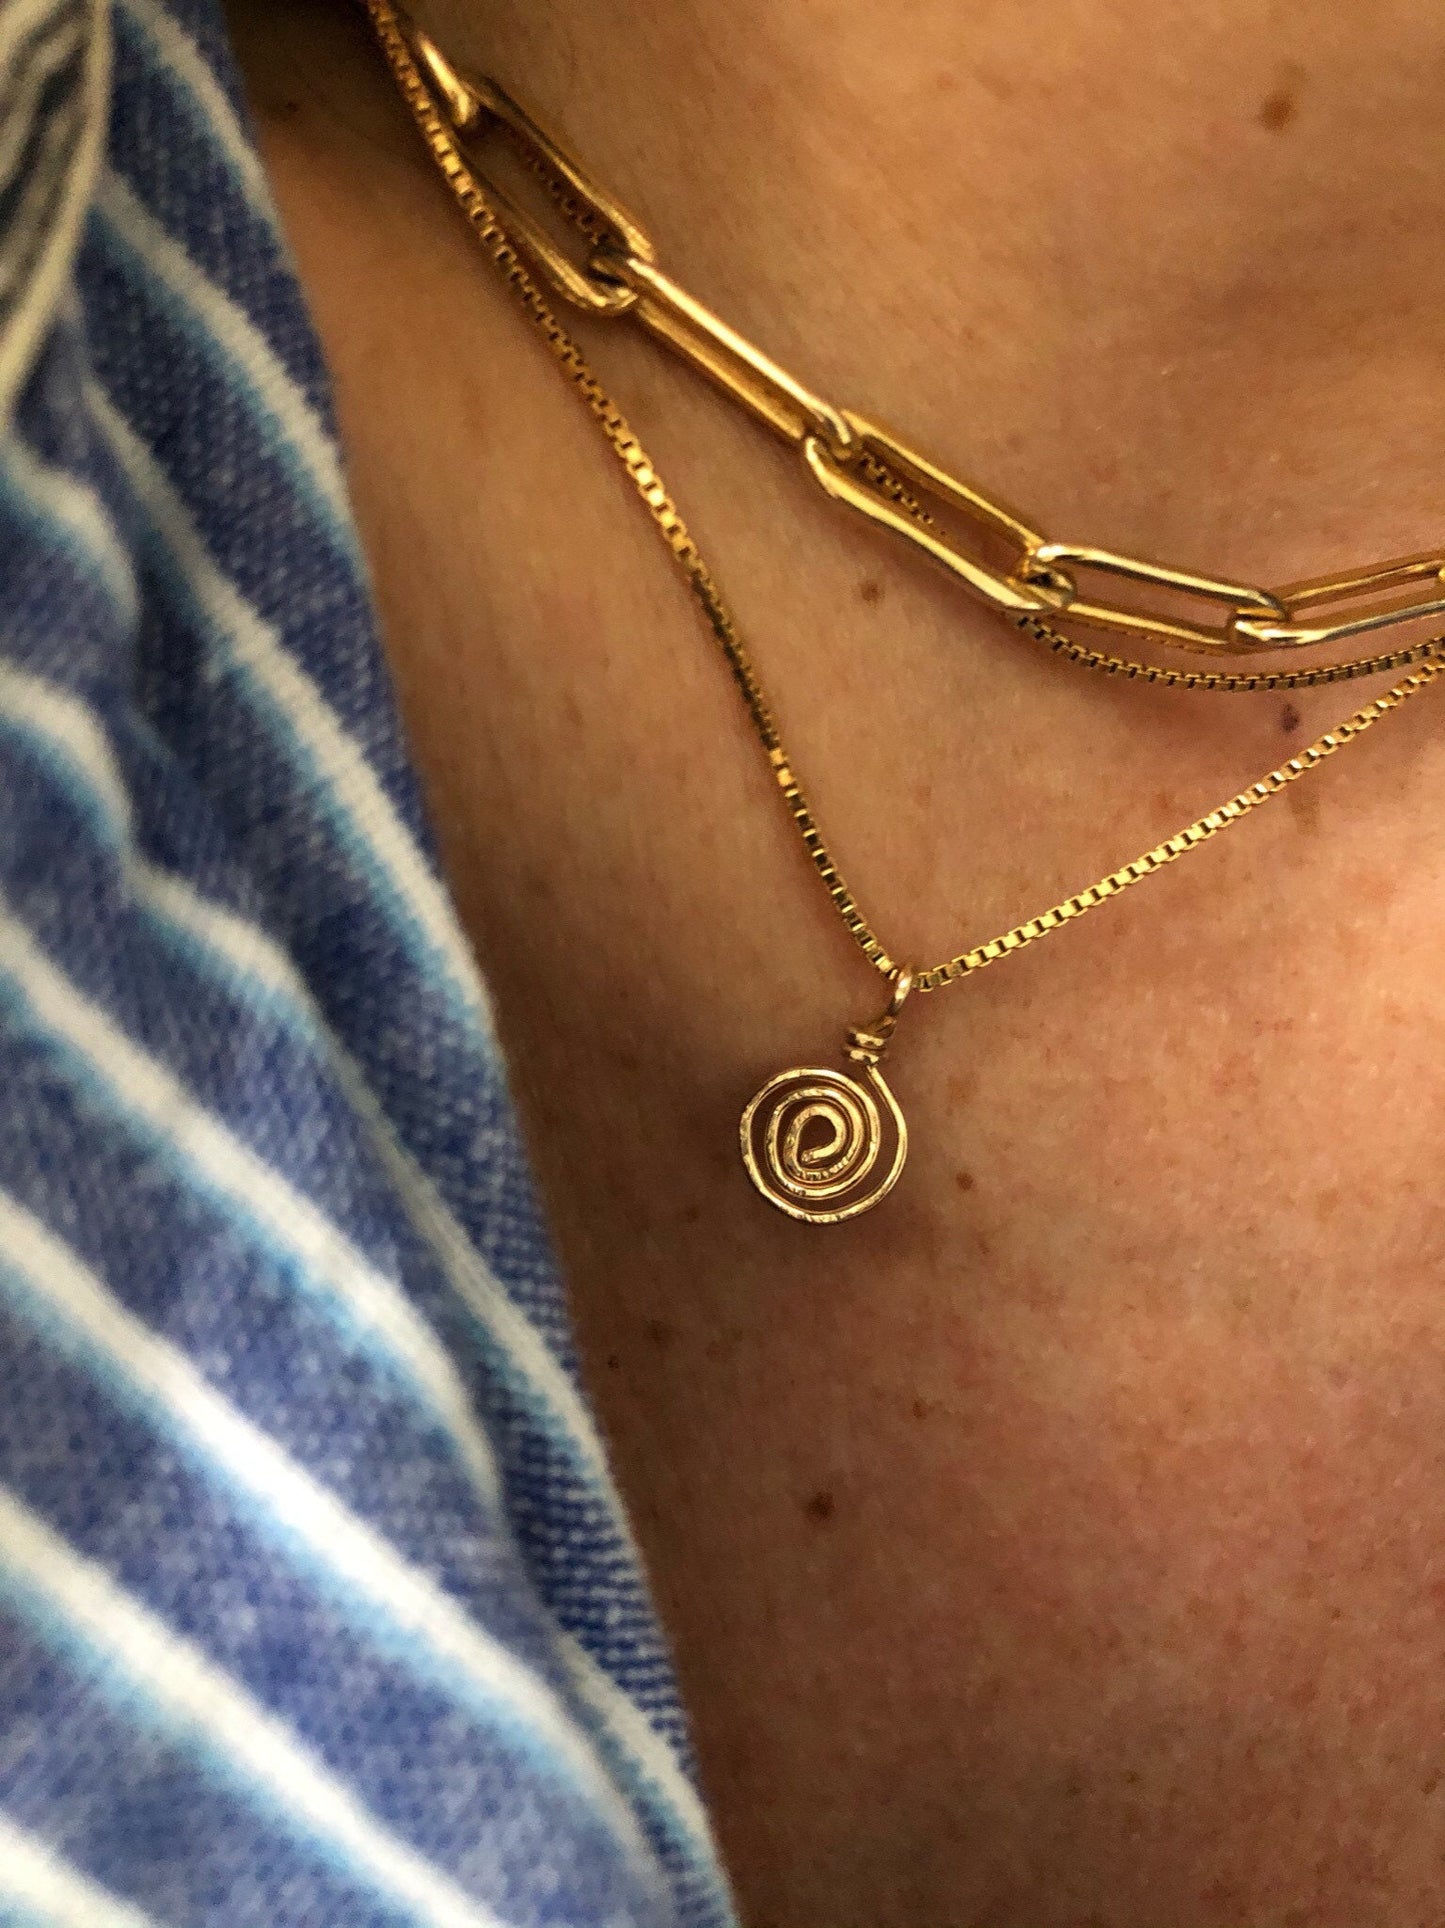 NEZ Spiral Gold Necklace